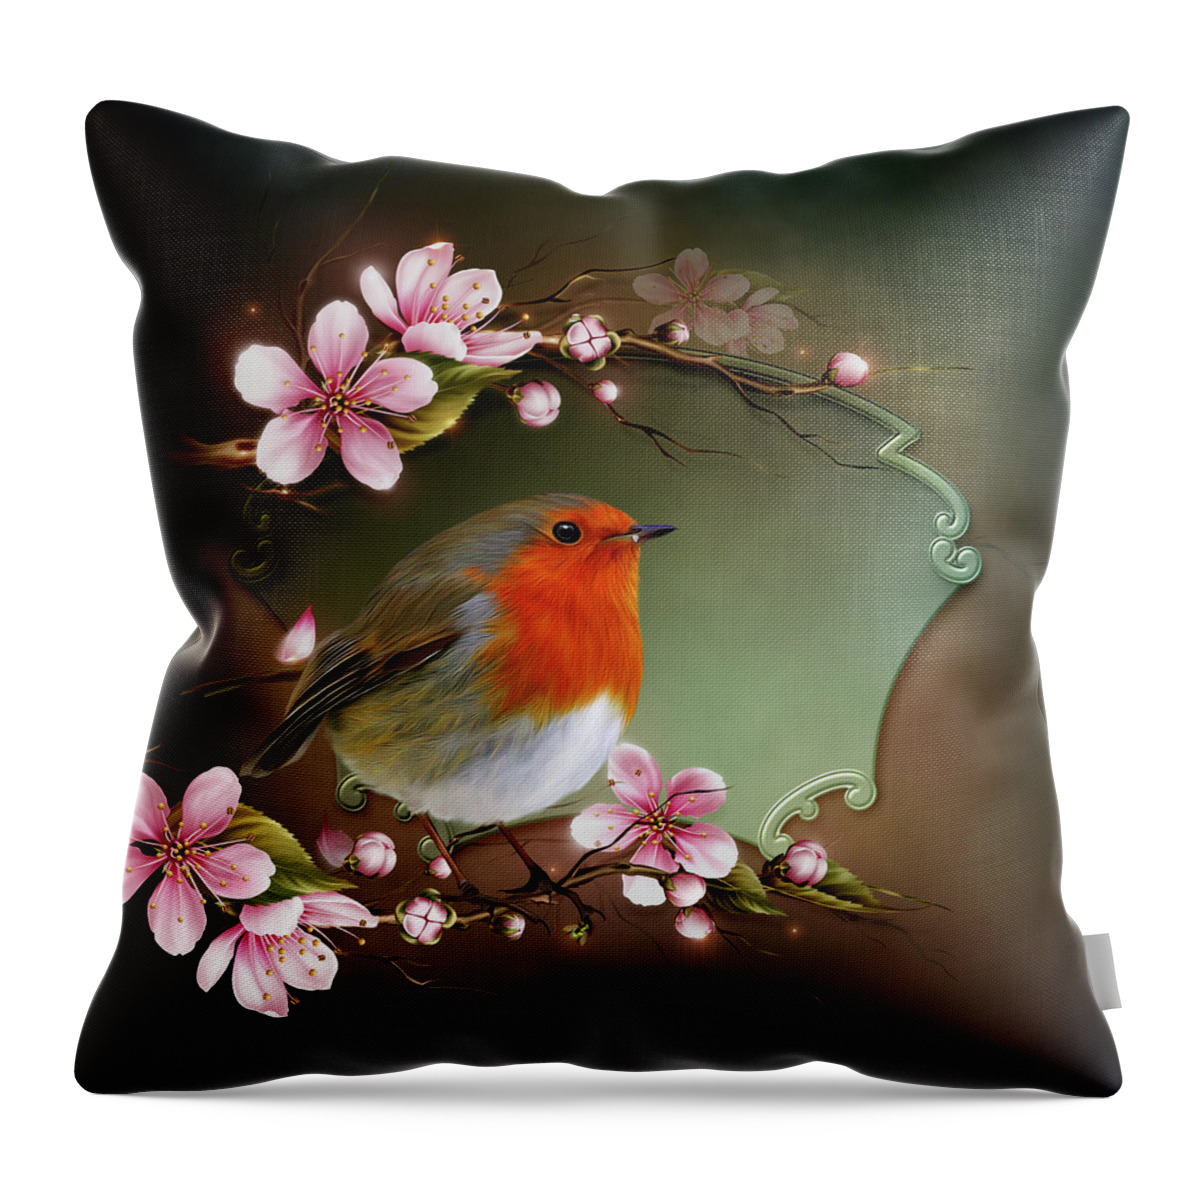 Charming Robin Throw Pillow featuring the digital art Charming Robin by John Junek